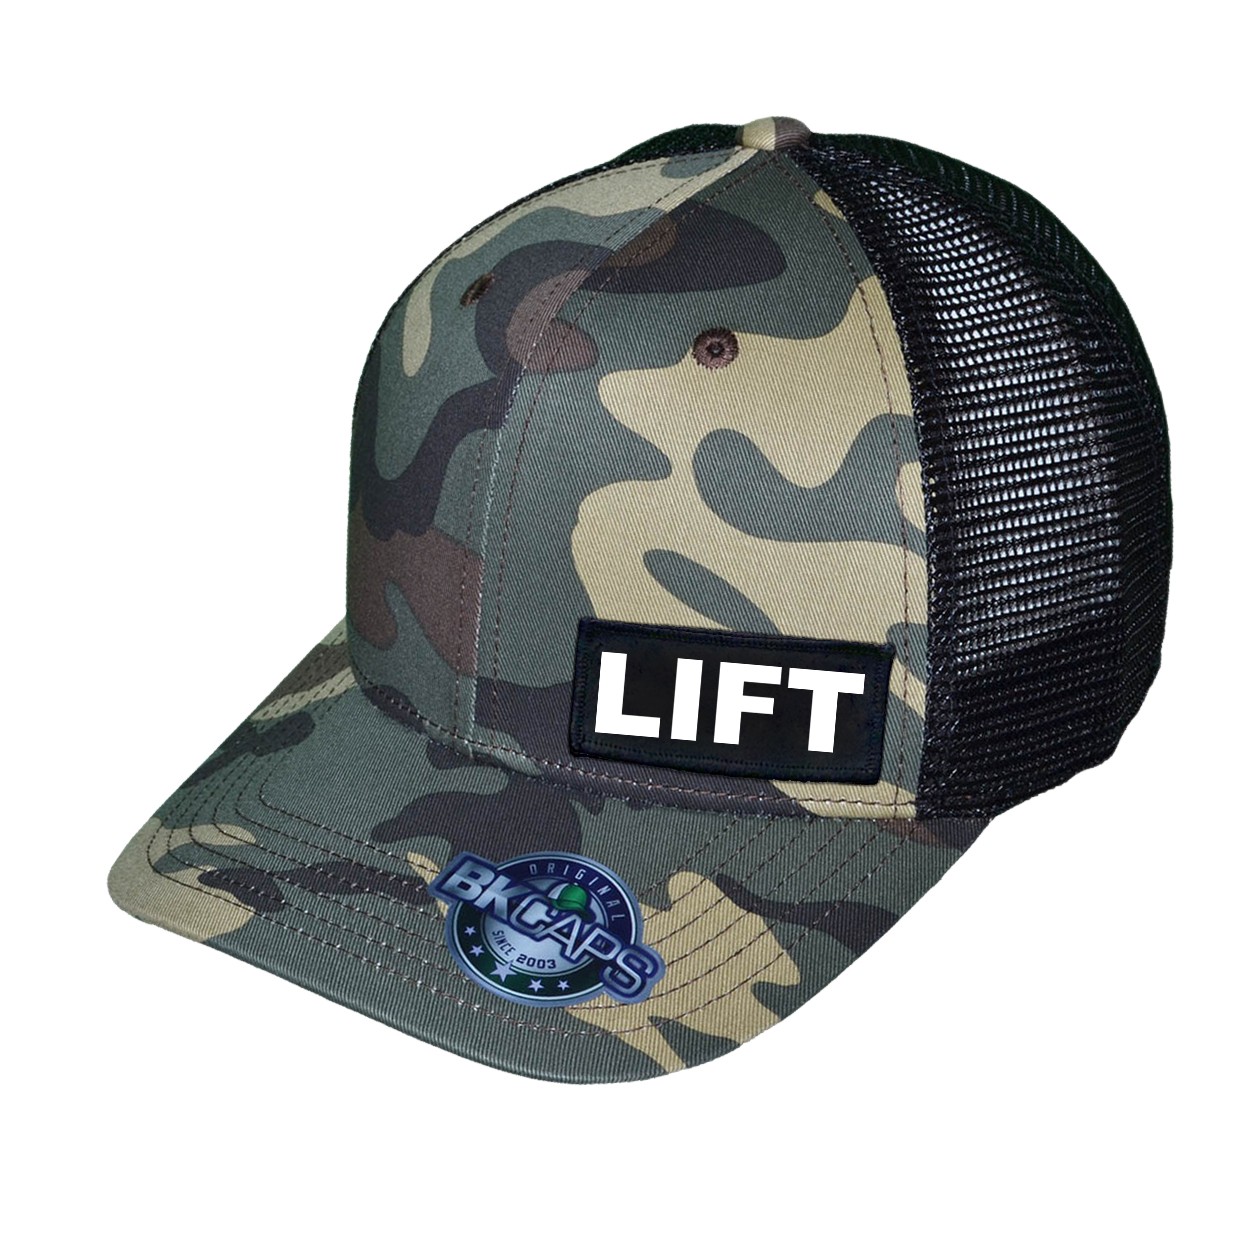 Lift Brand Logo Night Out Woven Patch Snapback Trucker Hat Khaki/Camo (White Logo)